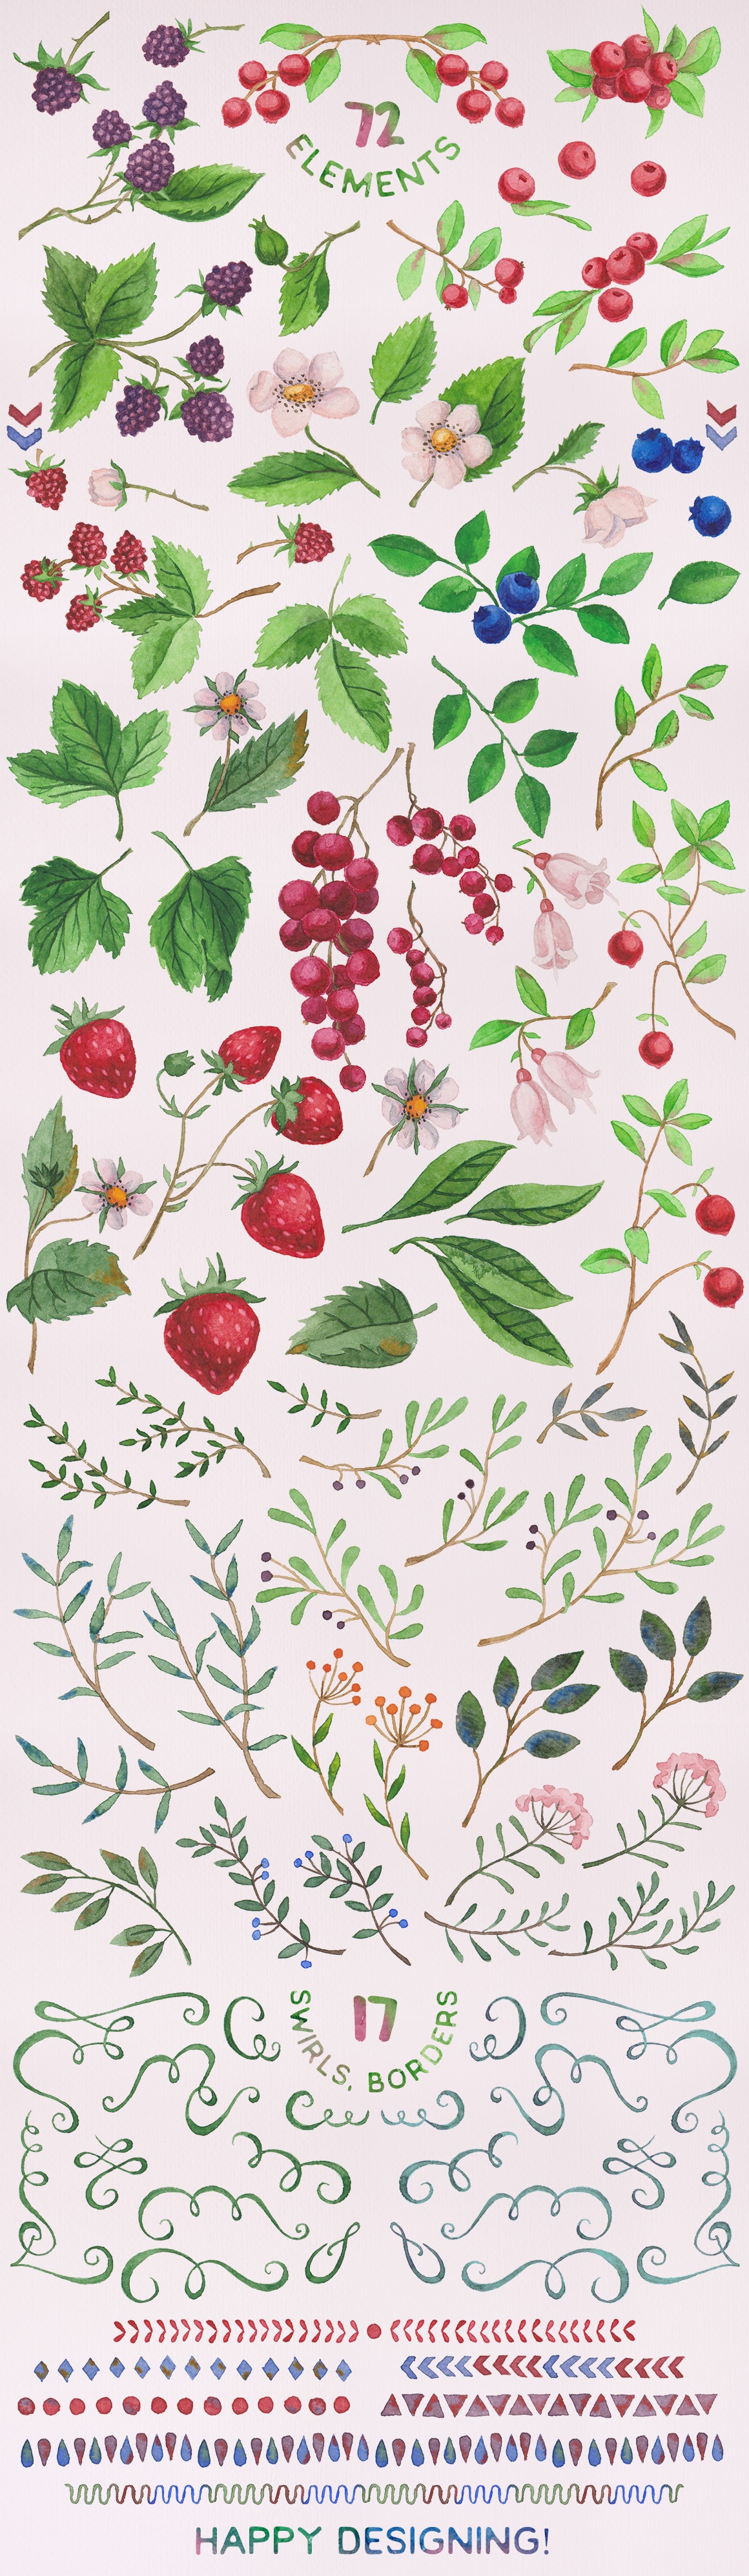 Berries&Swirls&Borders_by Stella2-min